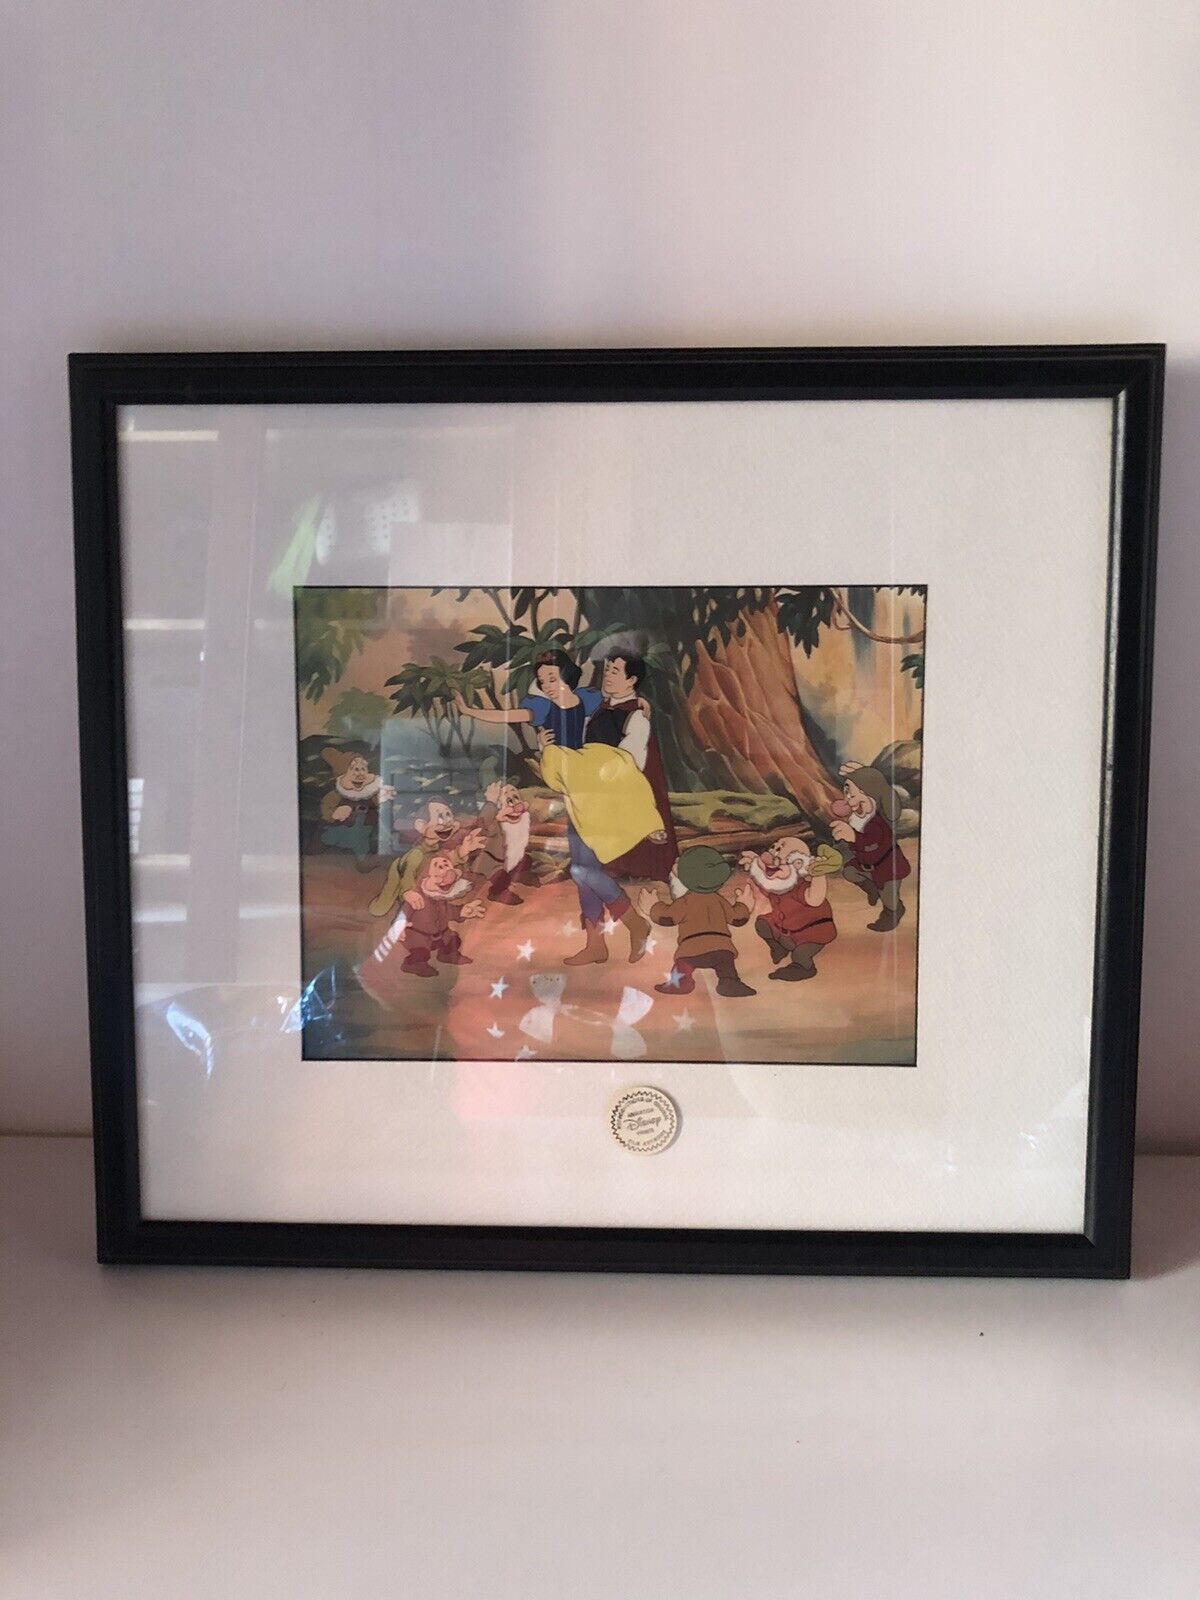 Snow White/Dwarfs Disney Animation Print Reproduction of Original Film Artwork